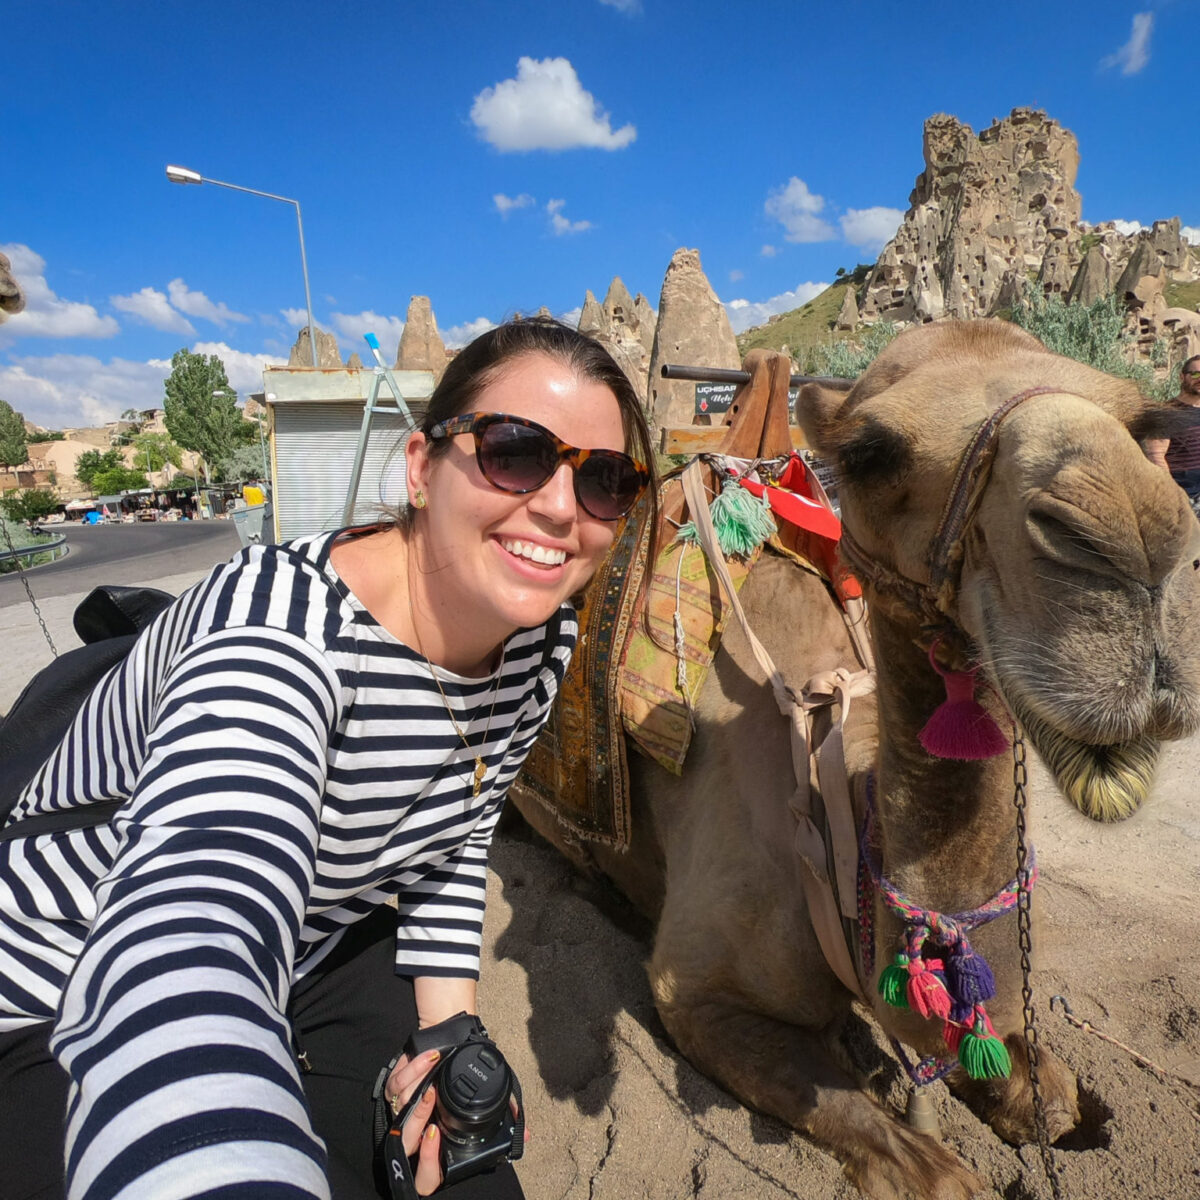 Cappadocia travel tips